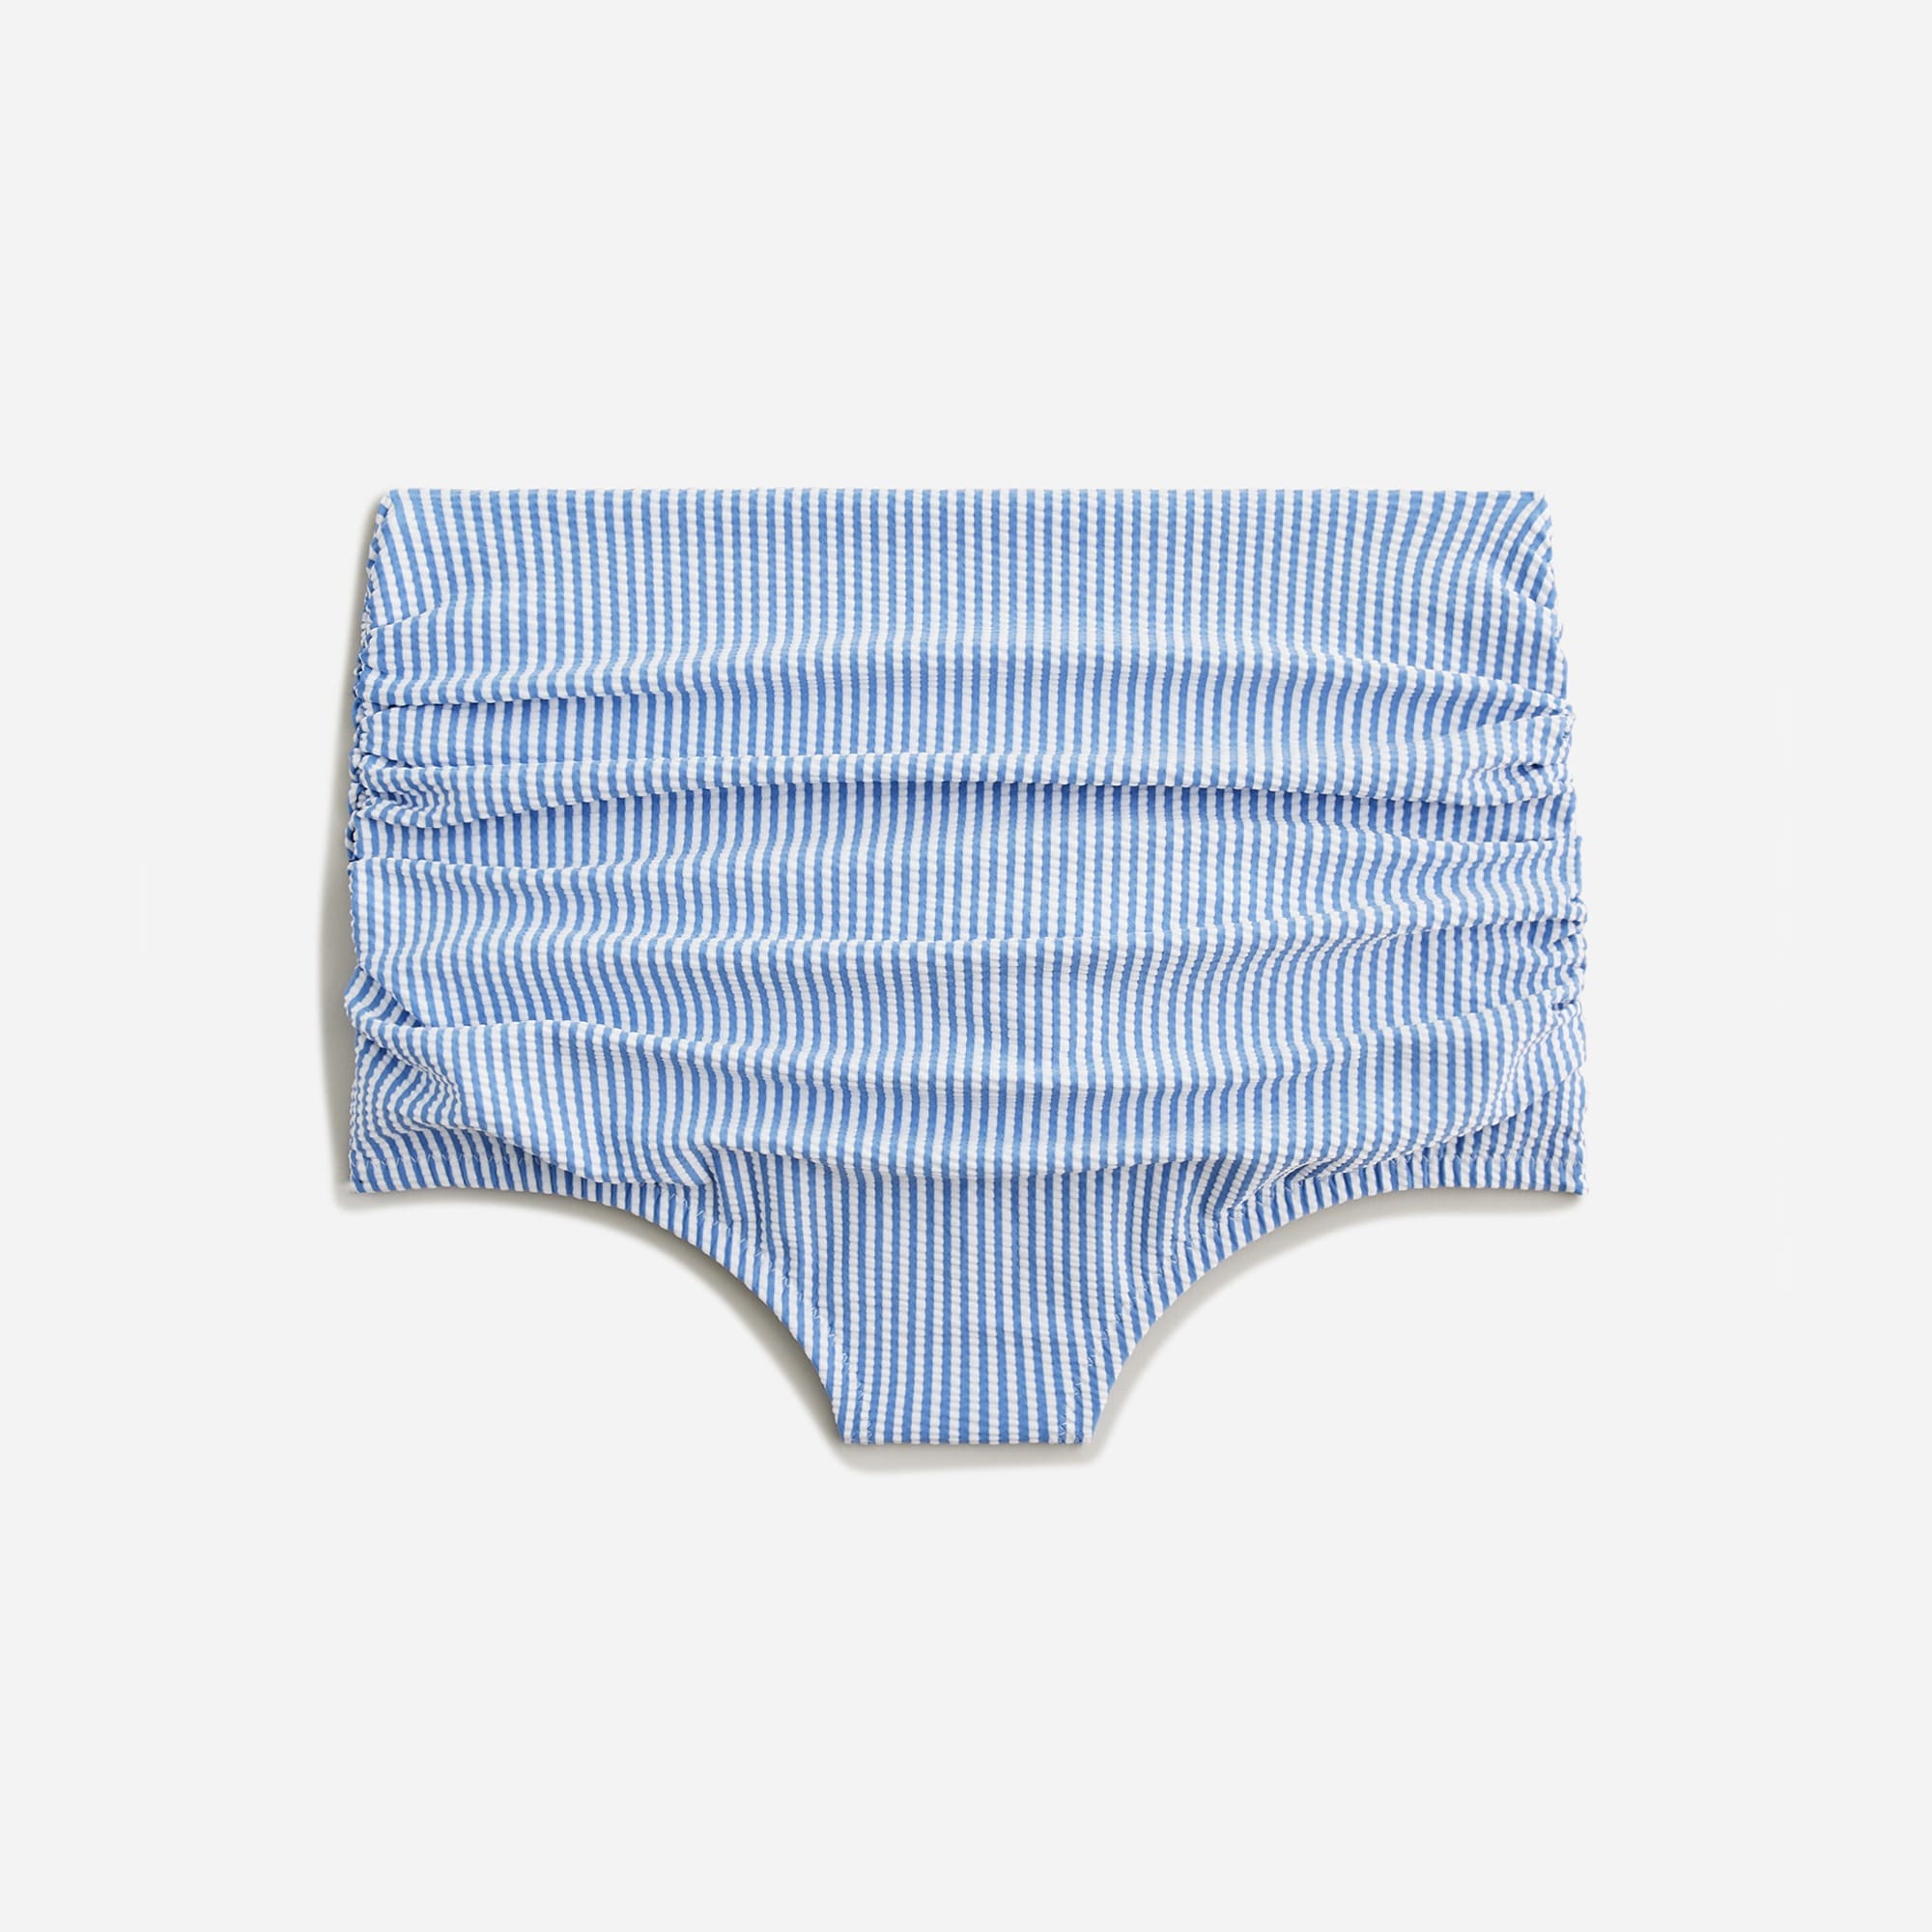  Ruched high-rise full-coverage bikini bottom in seersucker stripe